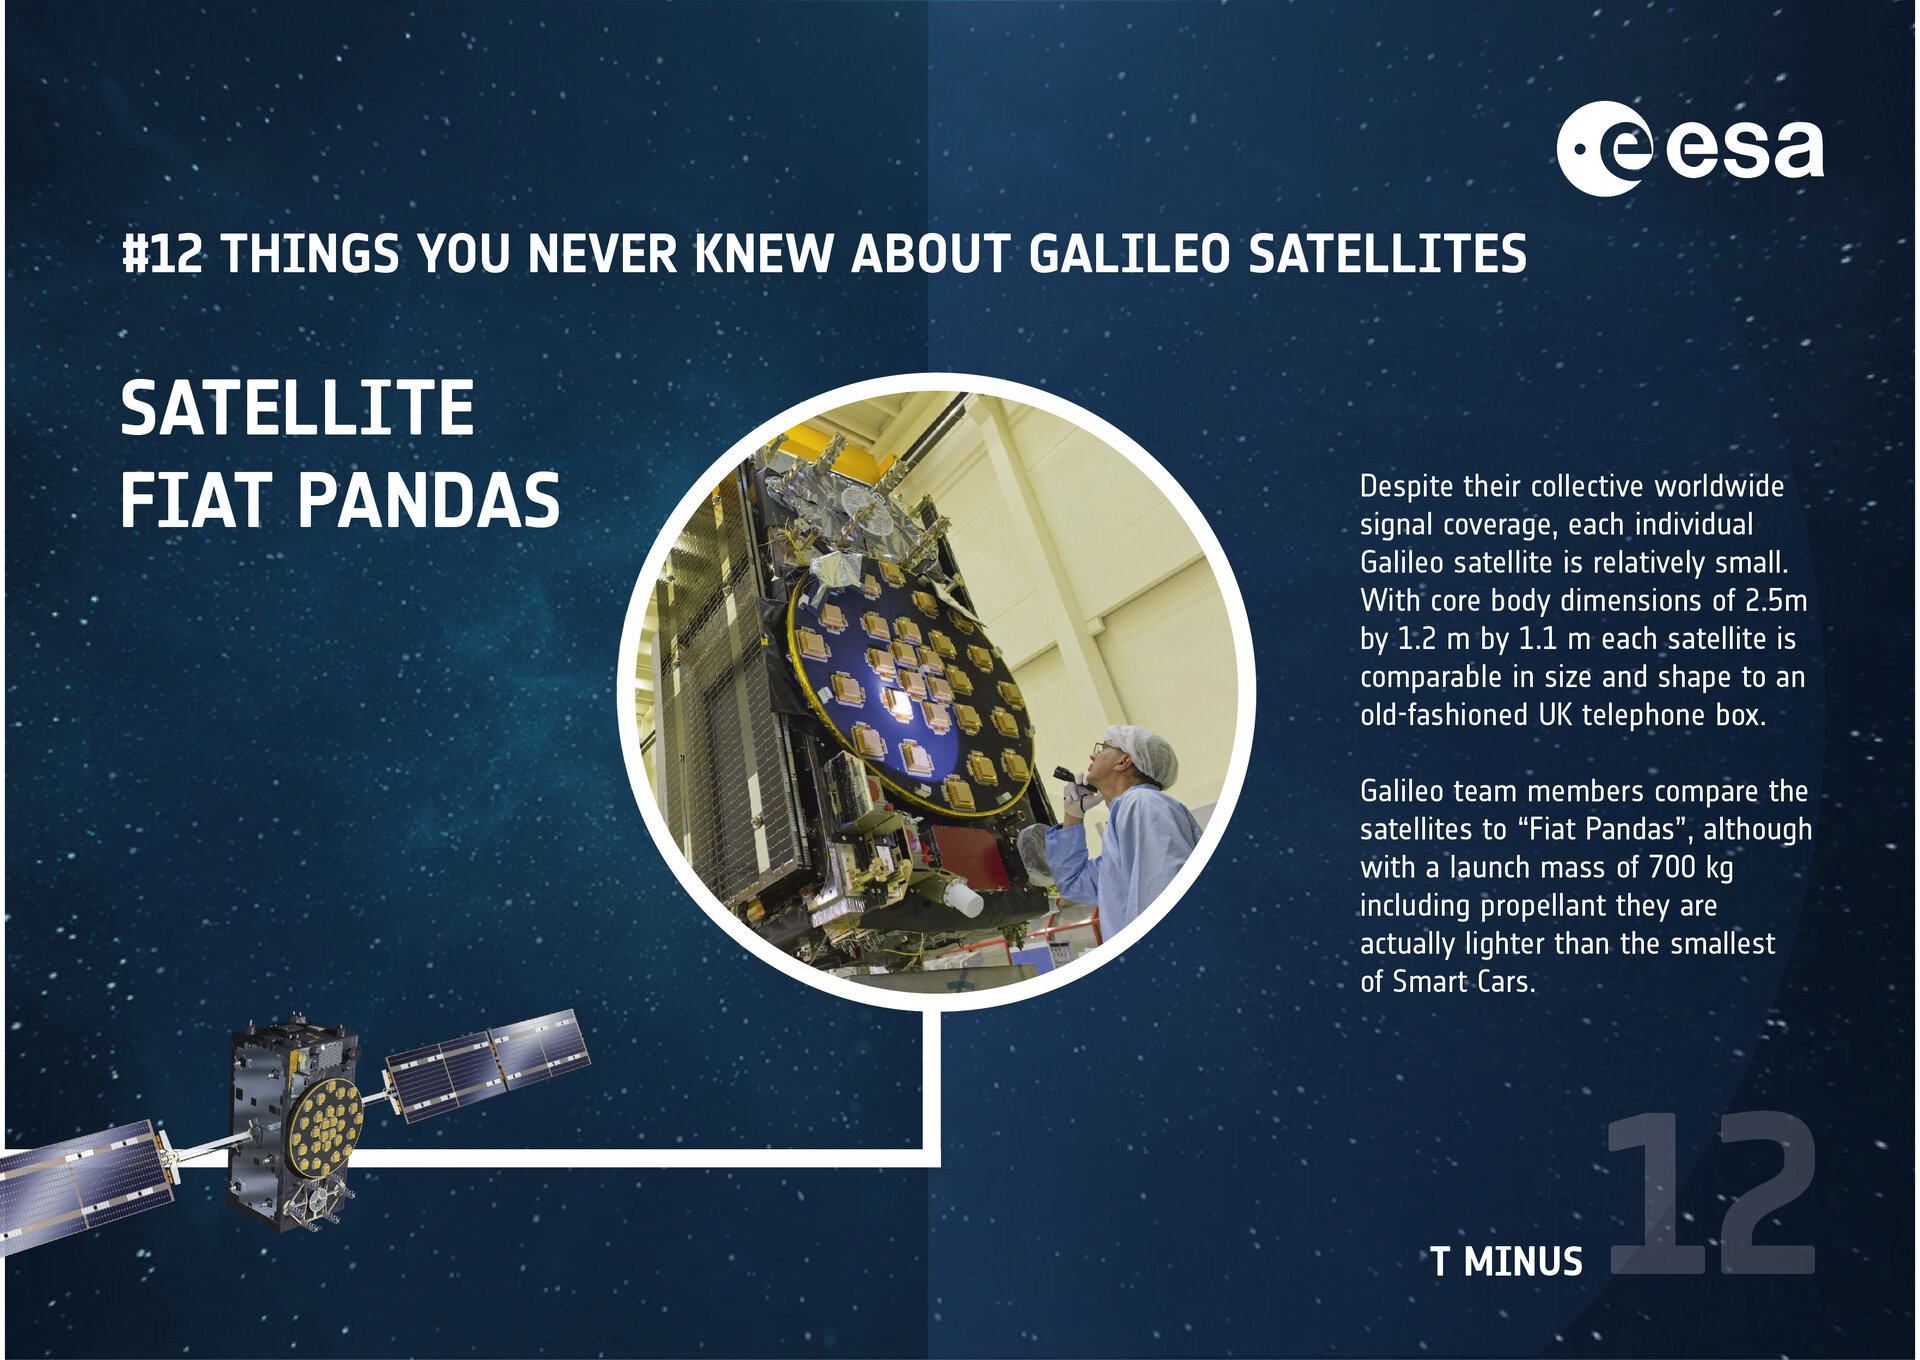 Galileo infographic: 'Satellite Fiat Pandas'